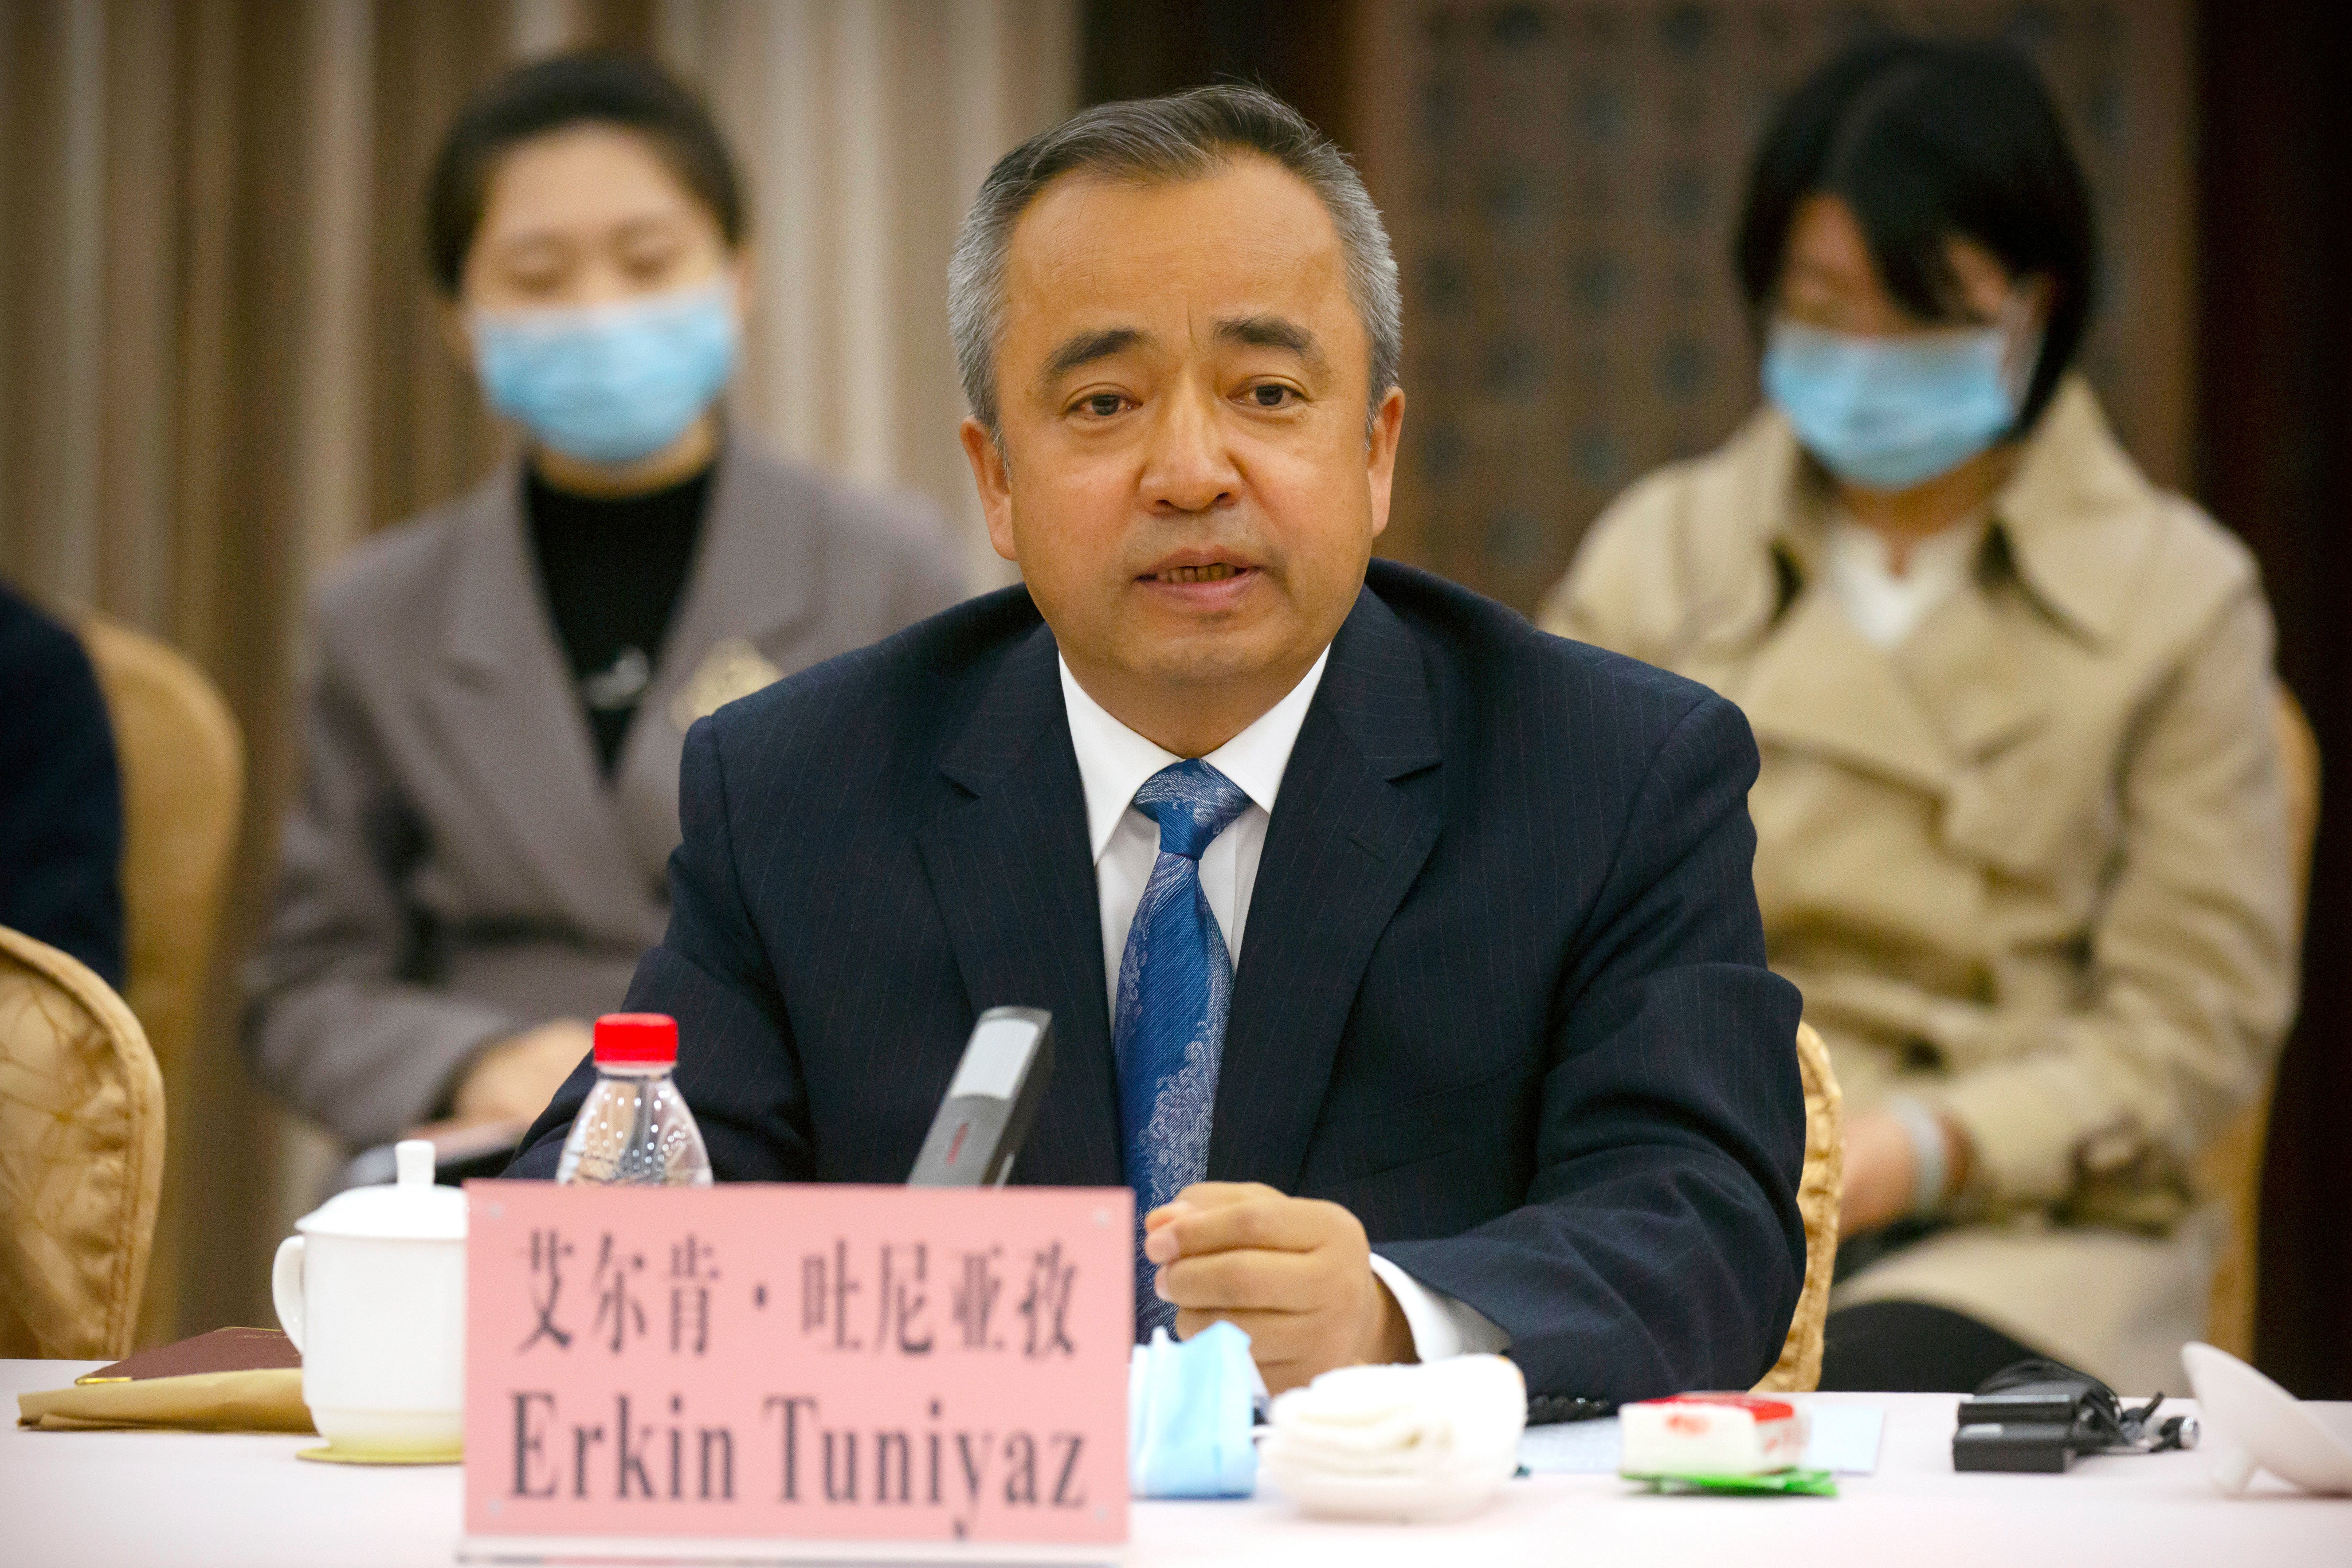 File: Erkin Tuniyaz speaks during a press conference in Urumqi in northwestern China's Xinjiang Uyghur region